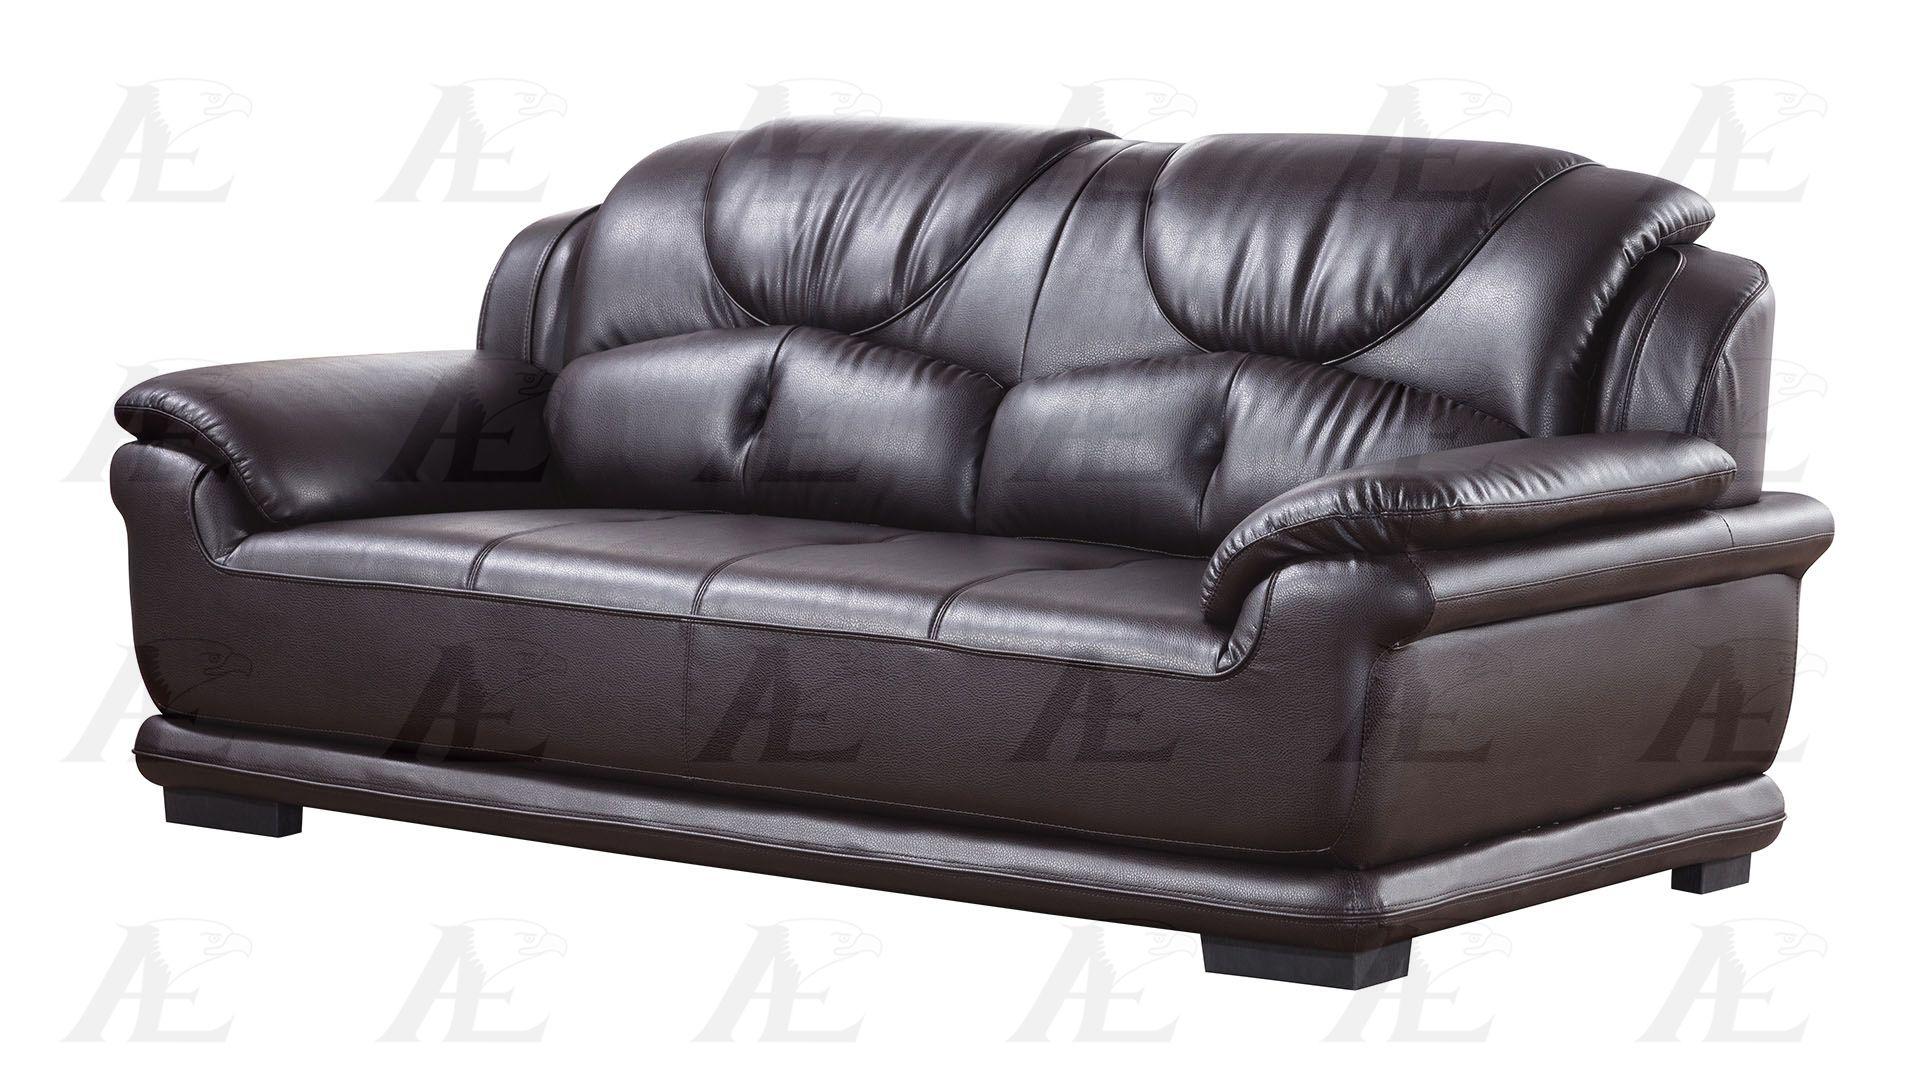 

    
American Eagle Furniture AE601-DC Sofa Loveseat and Chair Set Dark Chocolate AE601-DC 3Pcs
